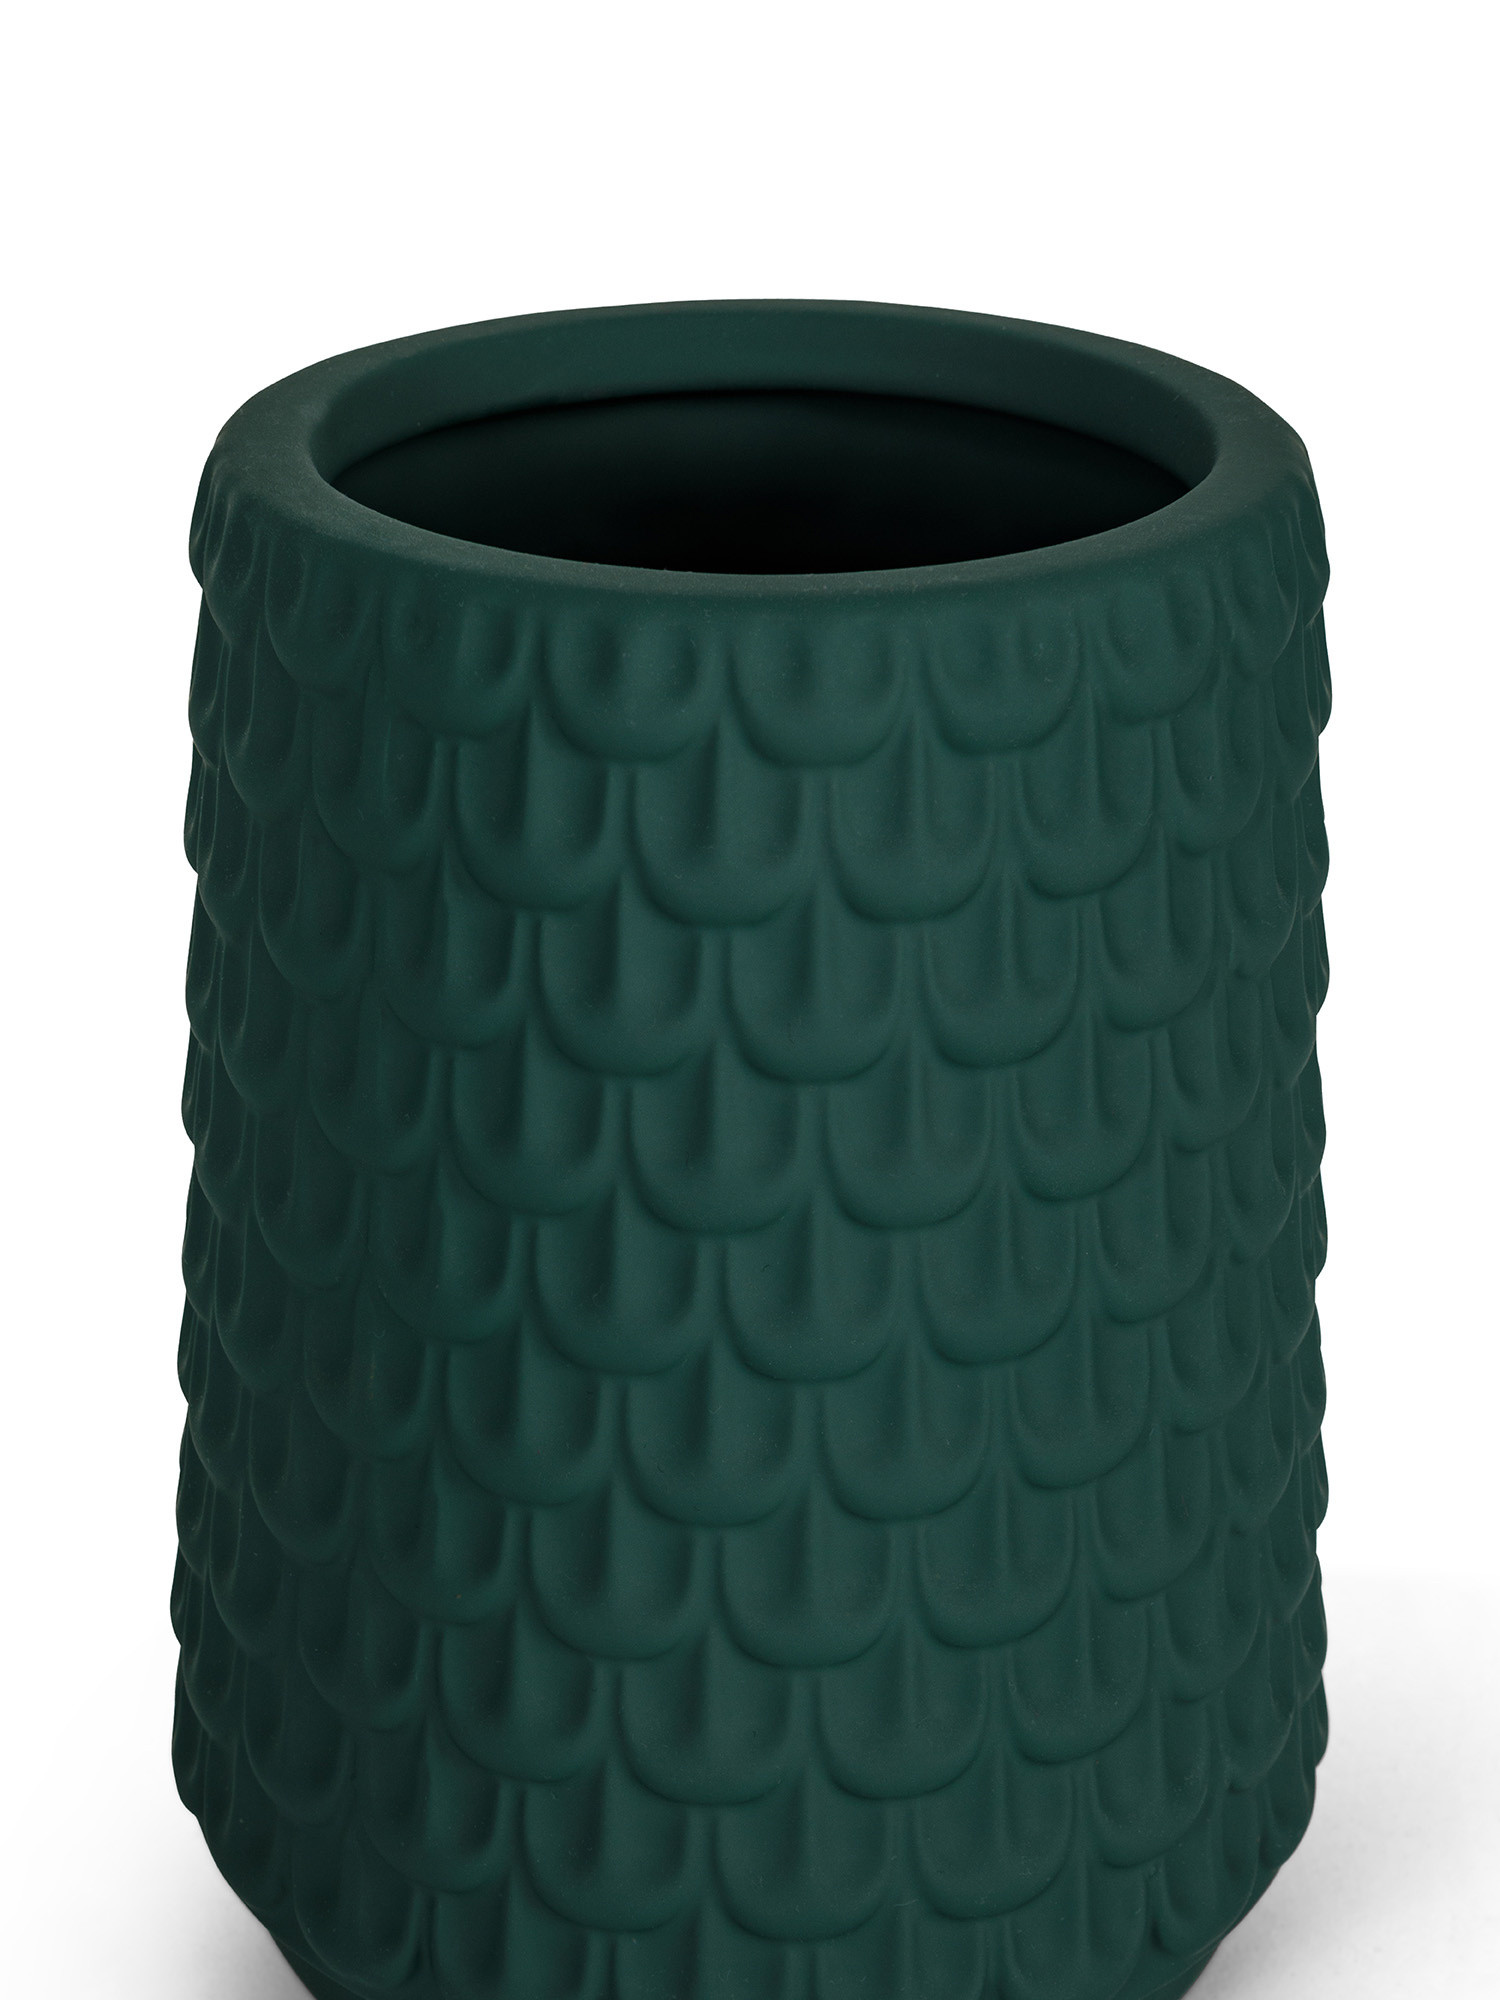 Vaso in ceramica, Verde, large image number 1